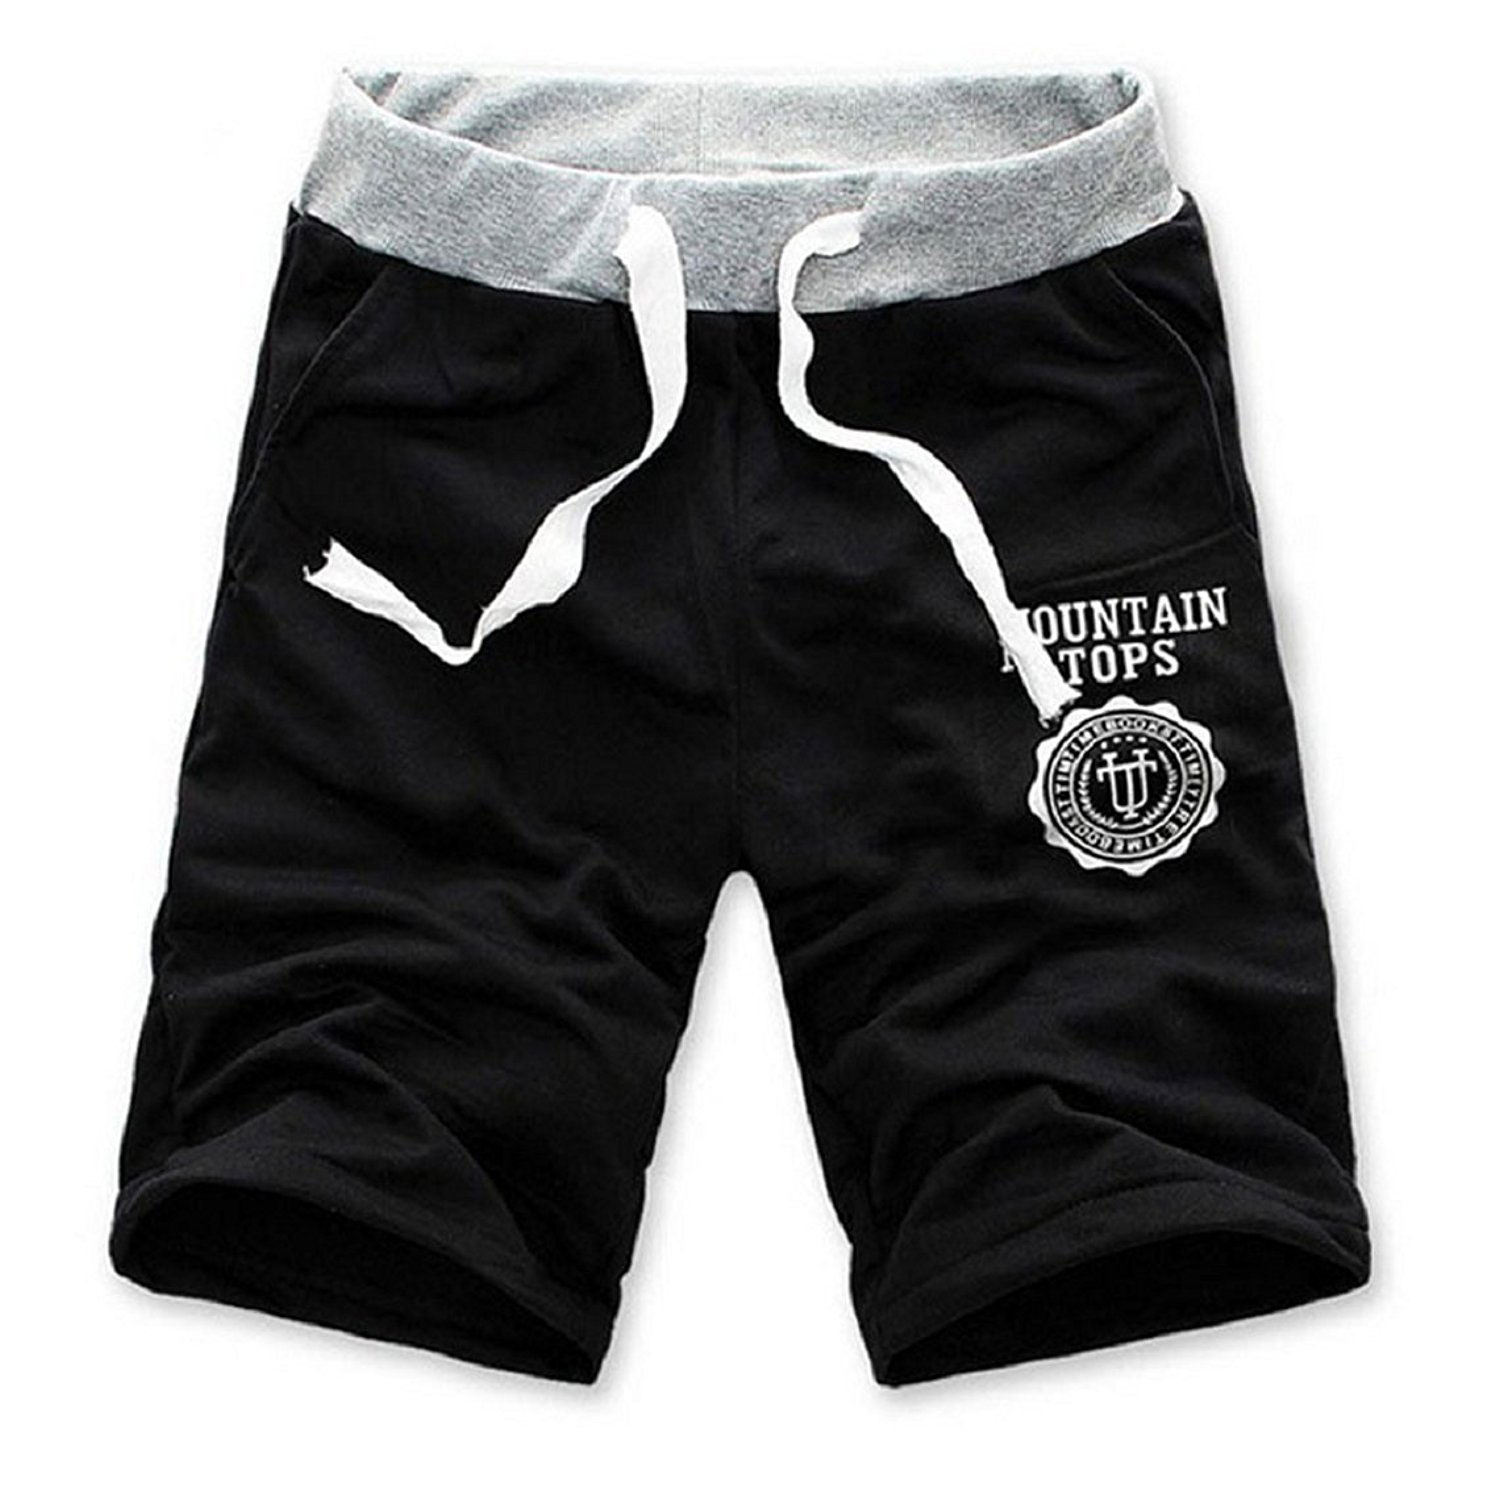  Large , Black : MalloomÂ® Sports Men Cotton Shorts Pants Gym Jogging Running Trousers